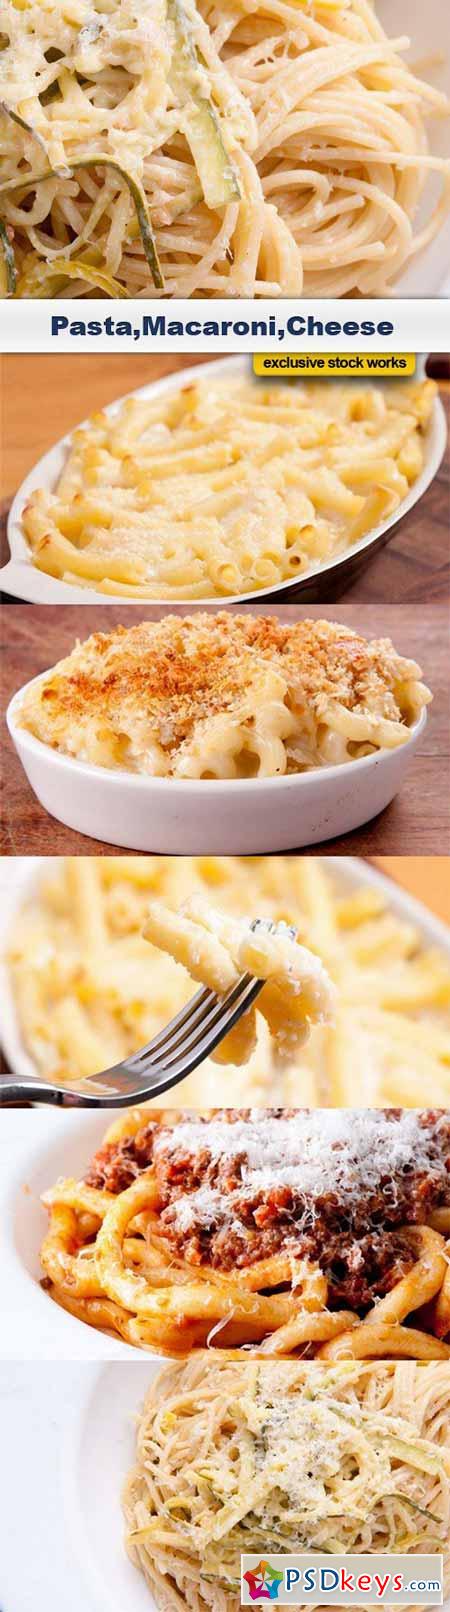 Pasta,Macaroni,Cheese - 6 UHQ JPEG